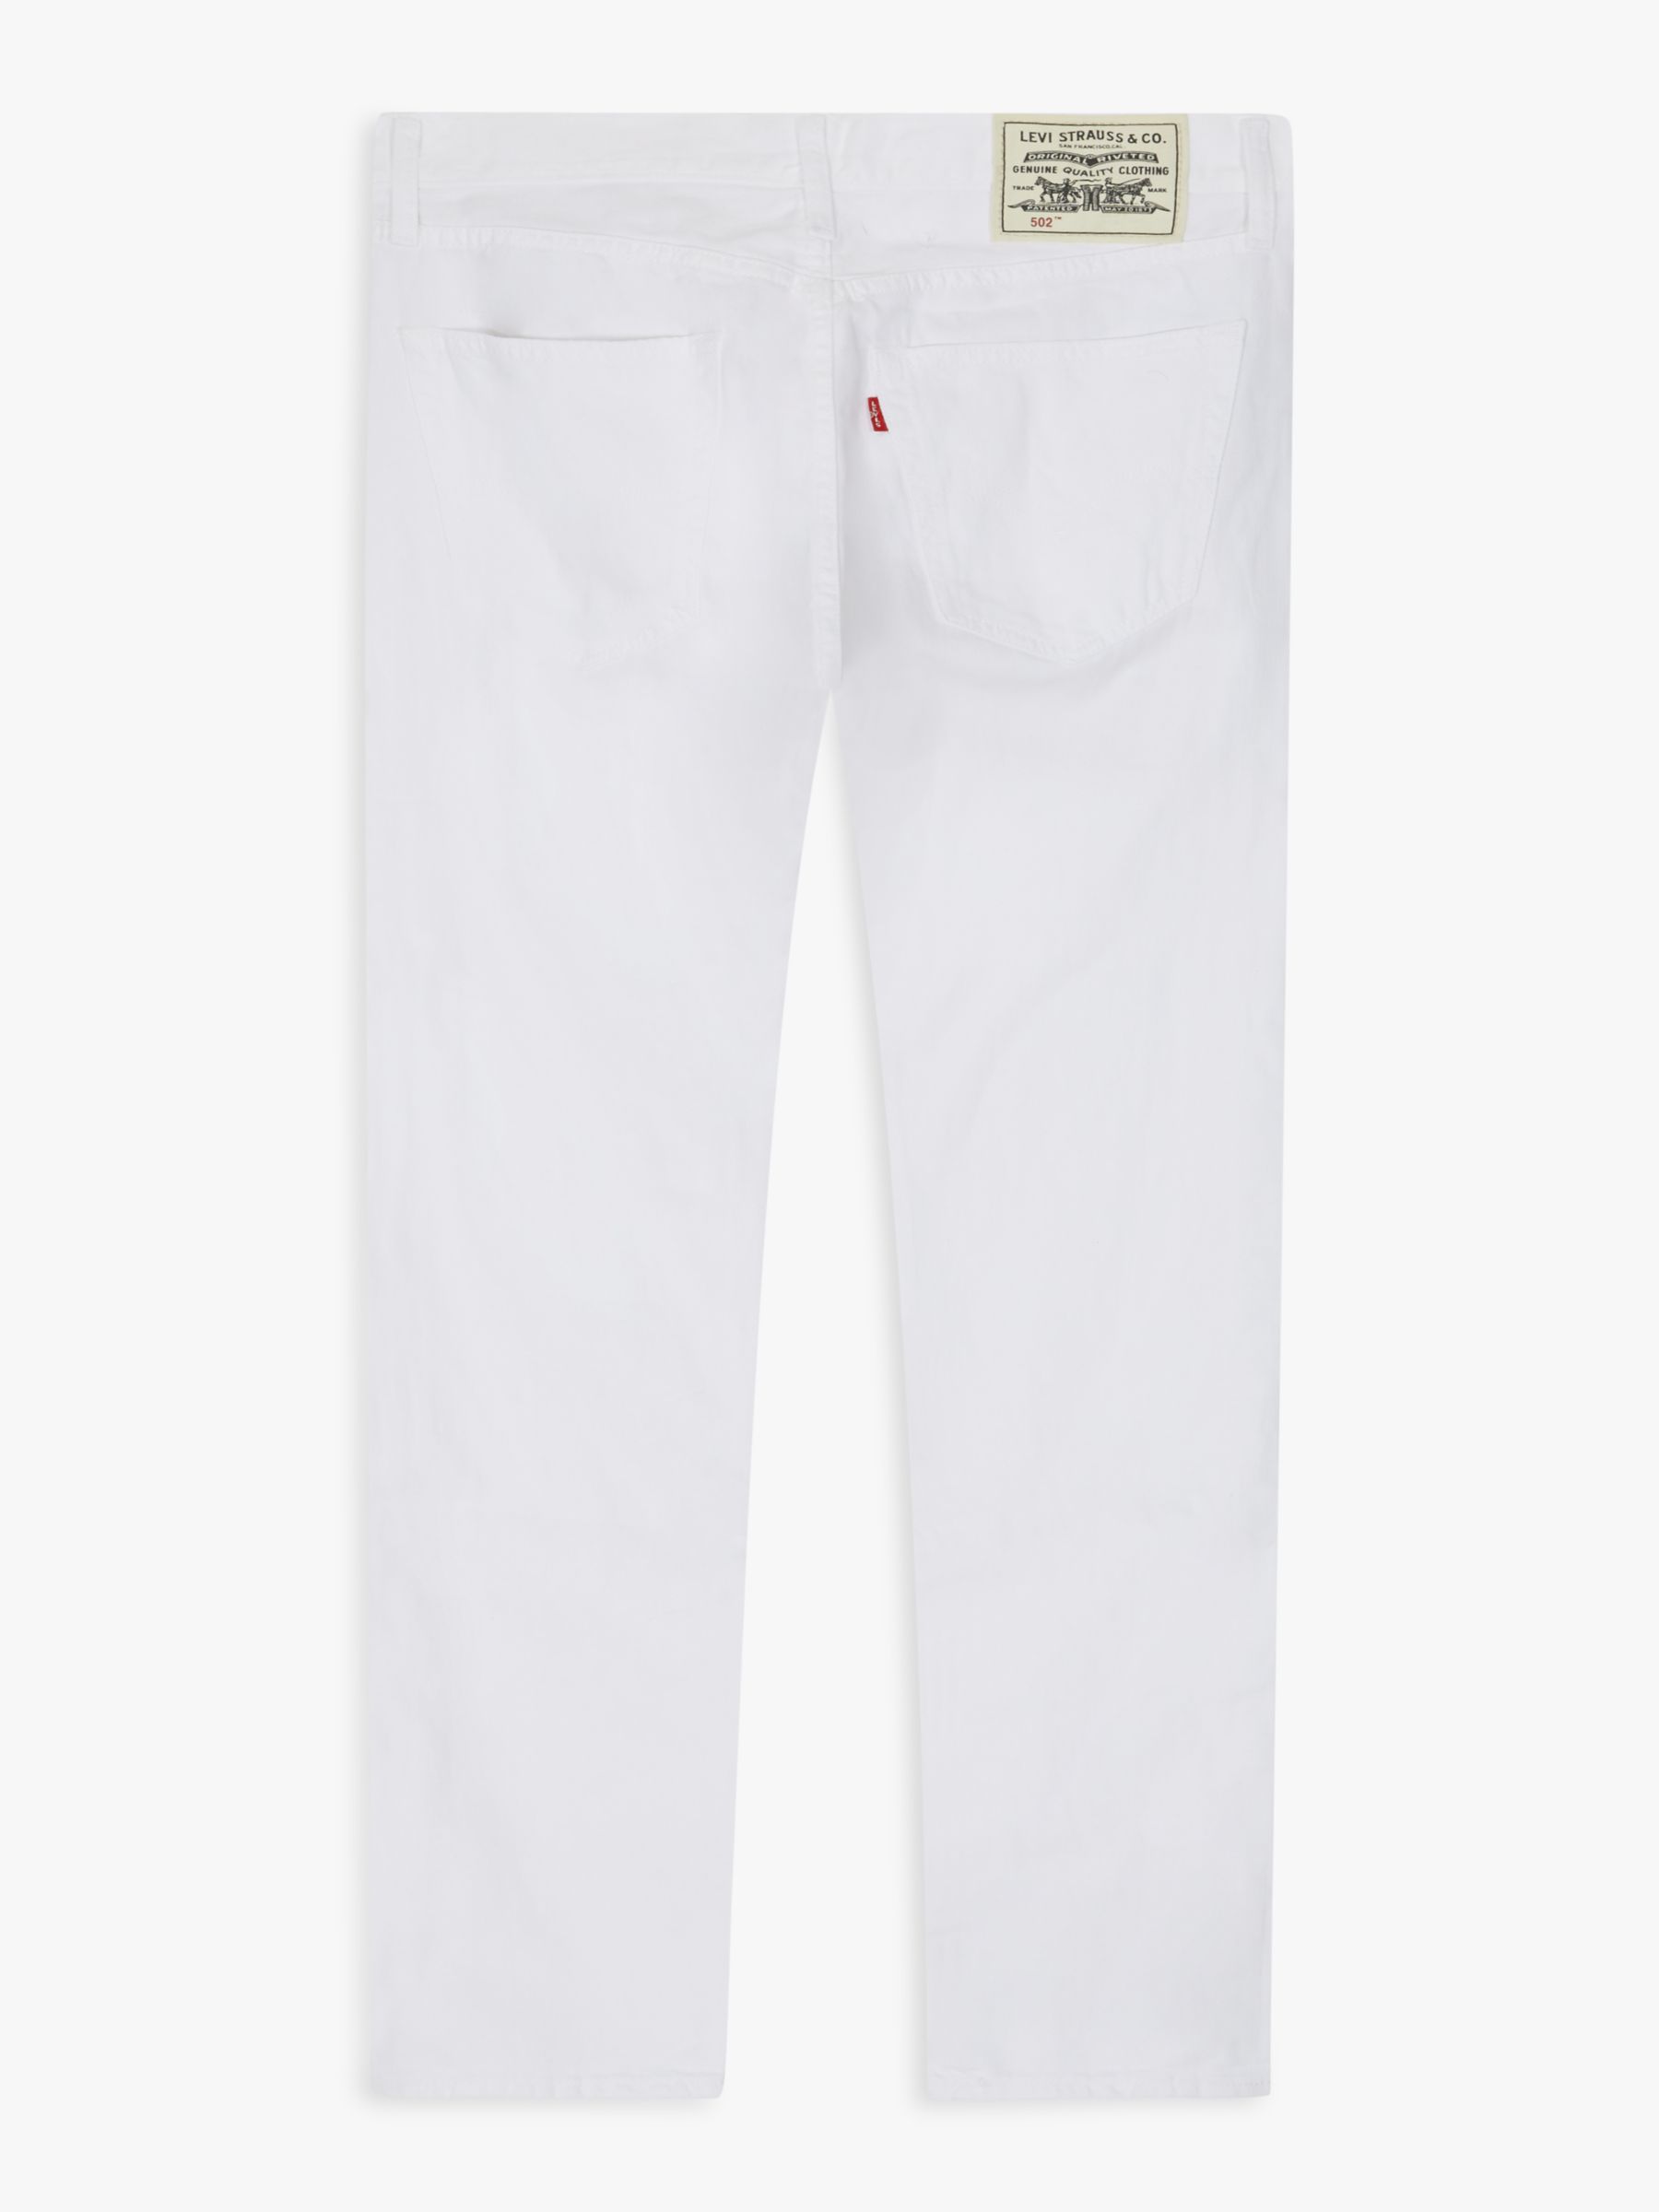 Levi's 502 Regular Tapered Jeans, Birch White, 30R